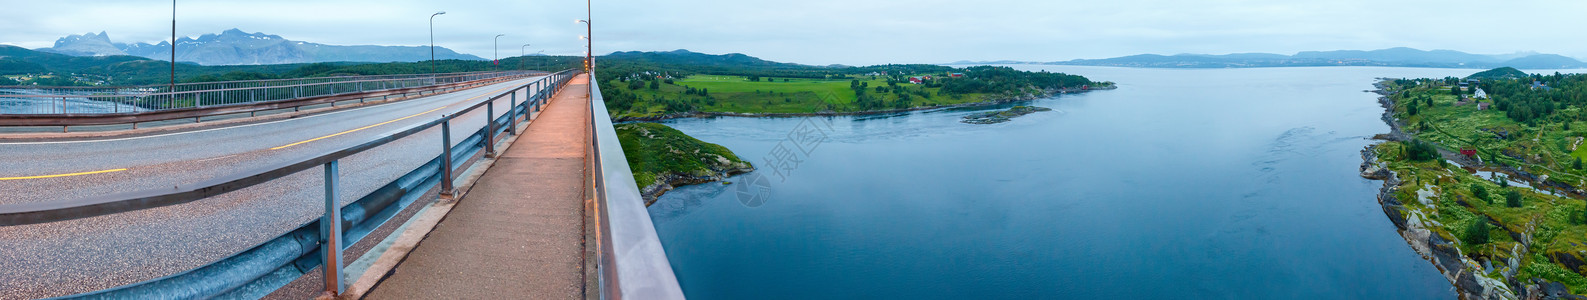 Fjord夏季夜视由水流桥挪威带水的桥面全景背景图片